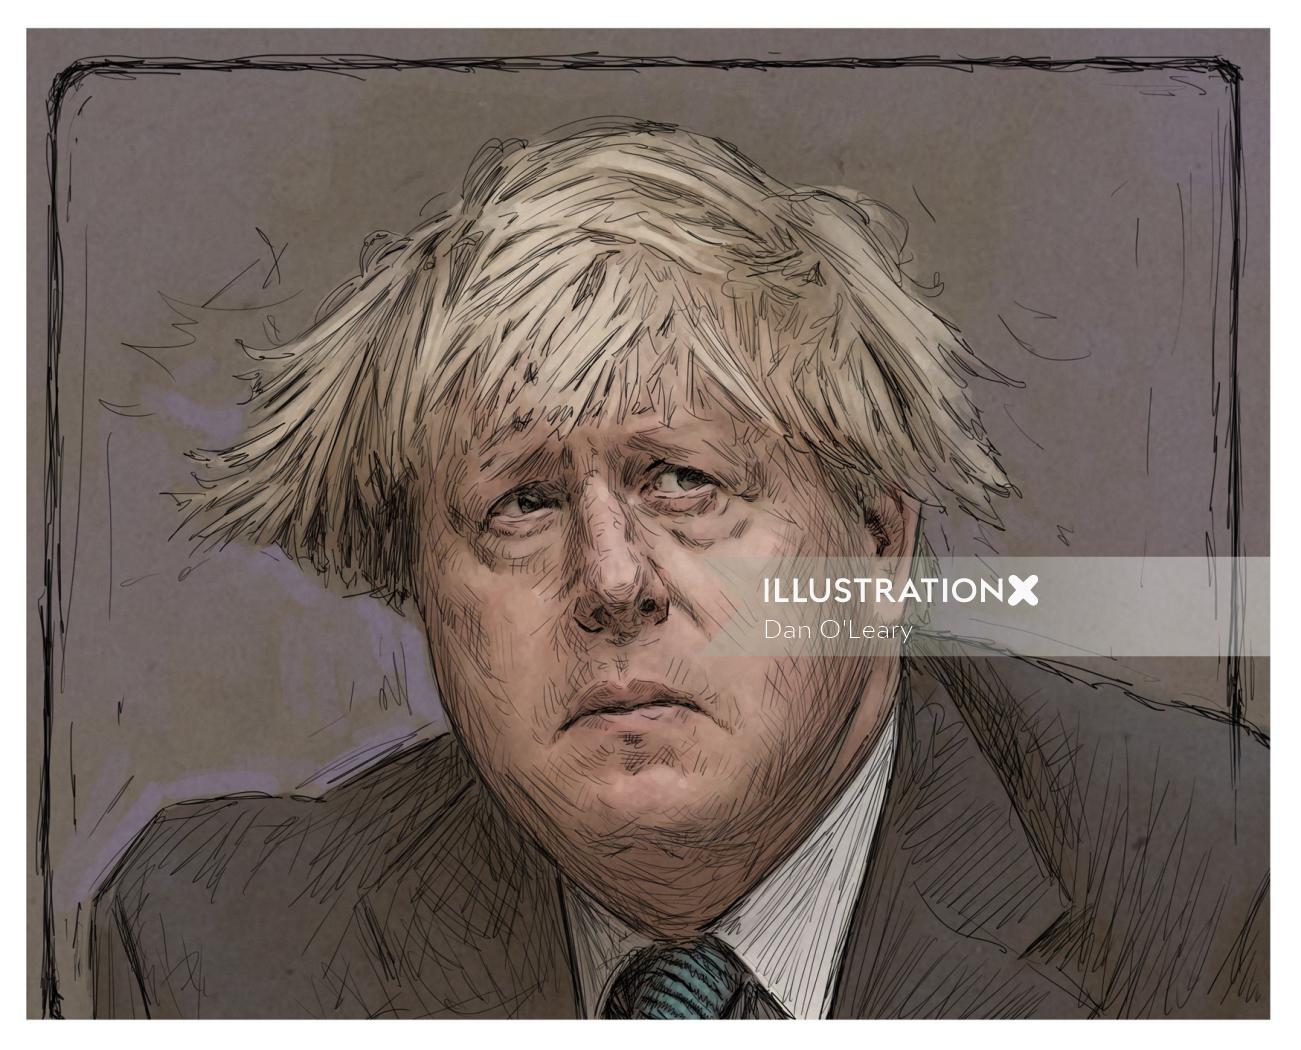 Primeiro-ministro britânico Boris Johnson